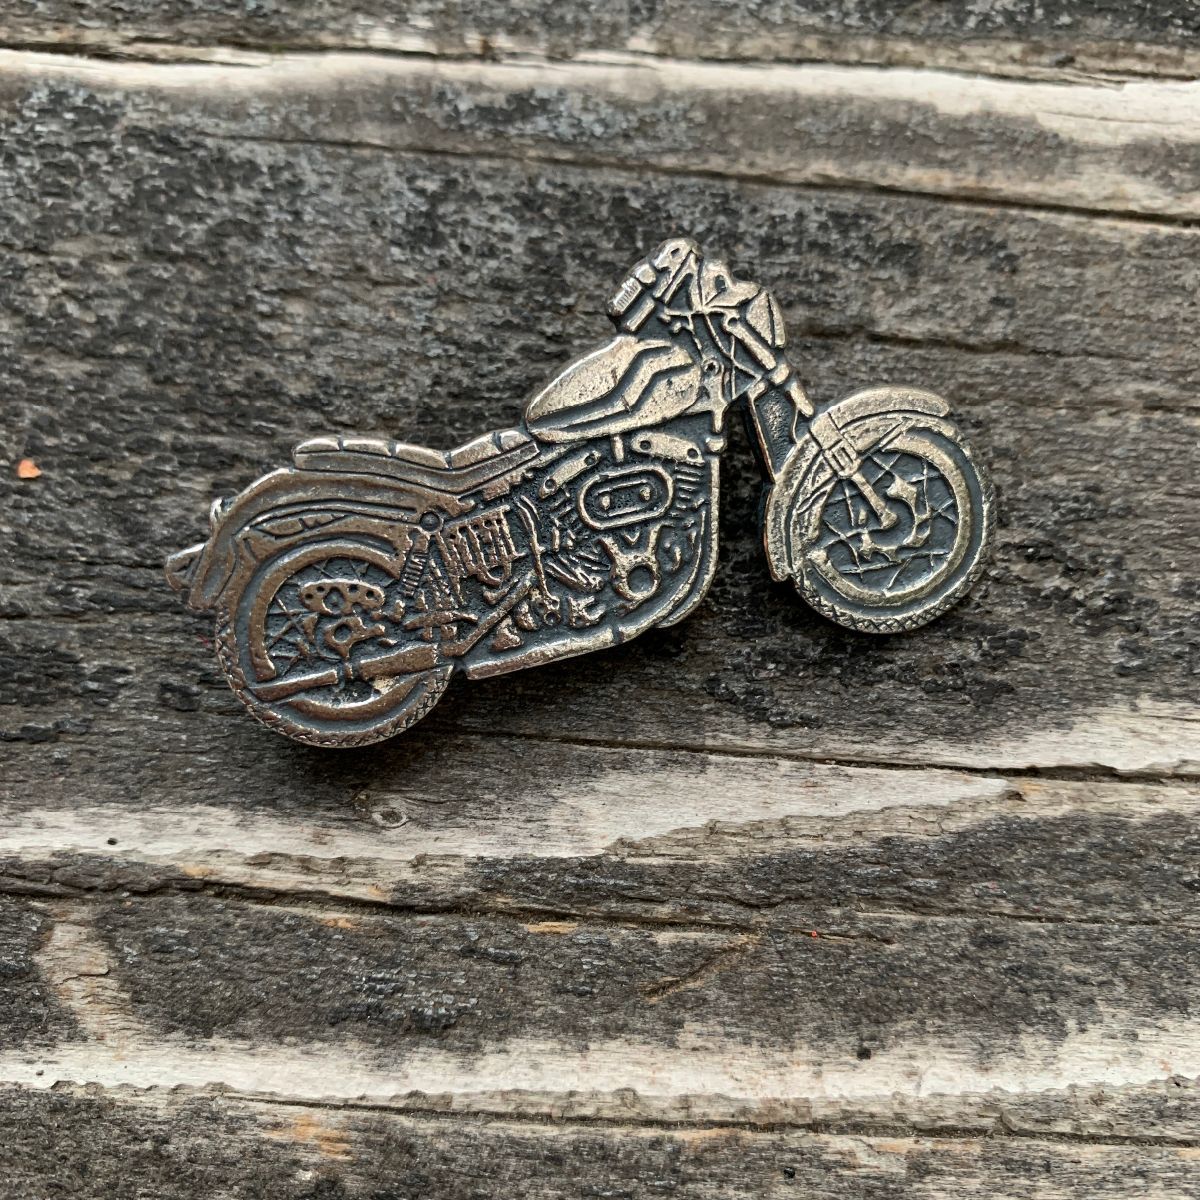 Pin on Custom motorcycles